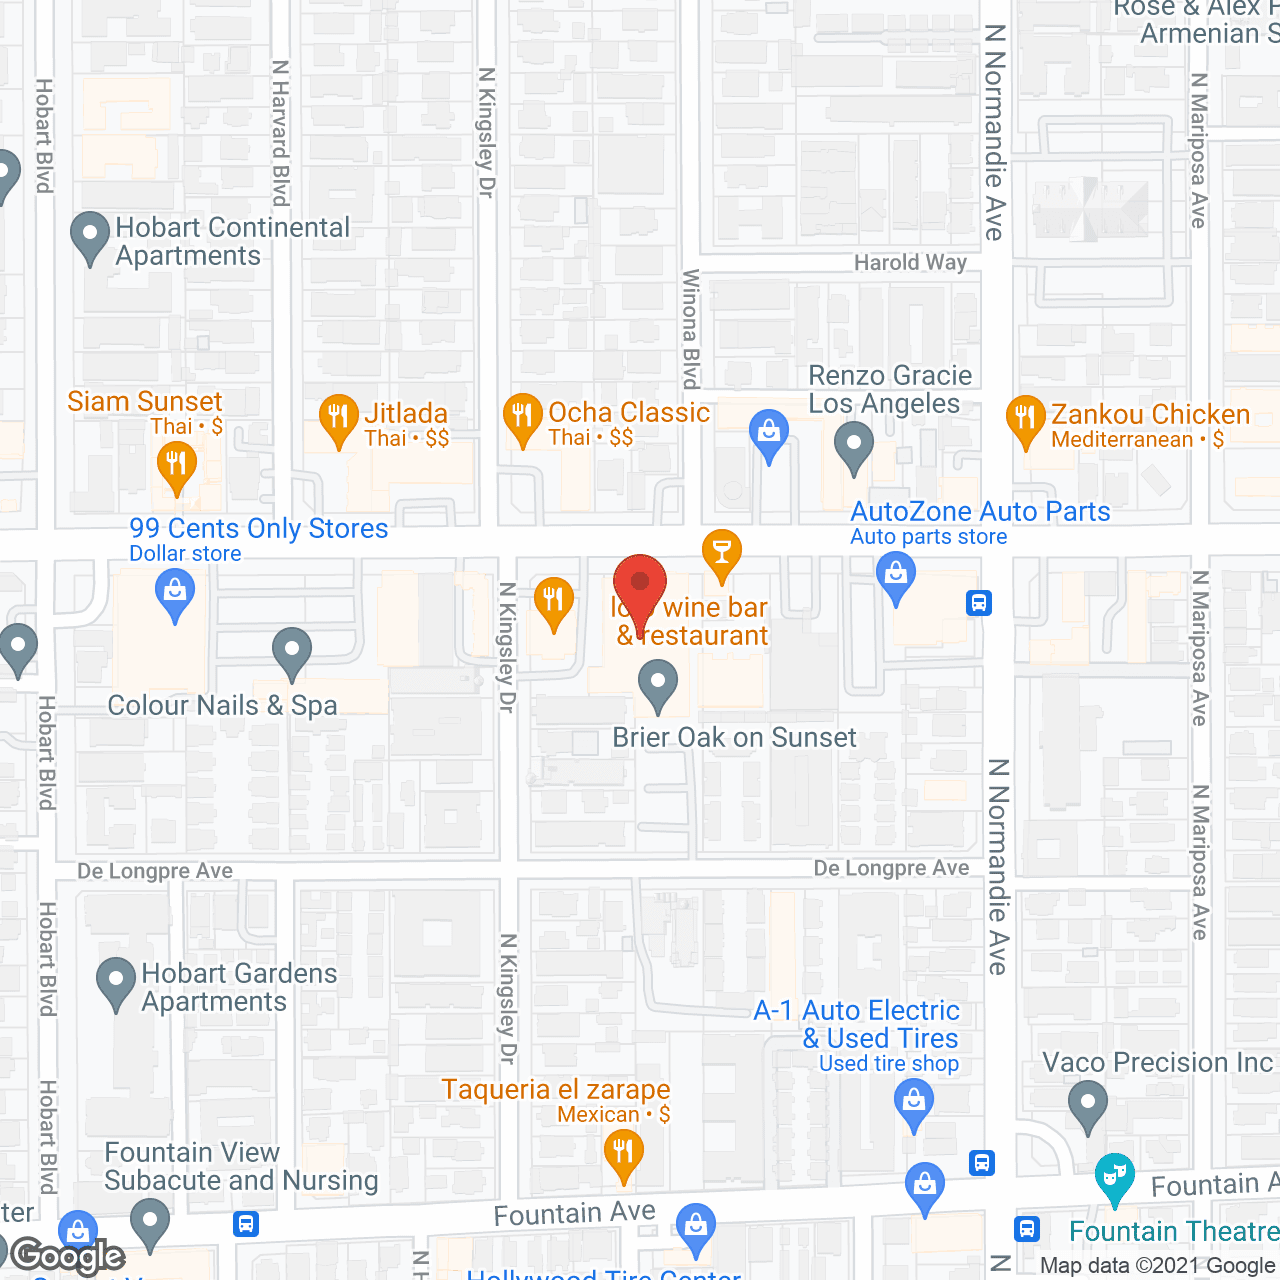 Brier Oak on Sunset in google map